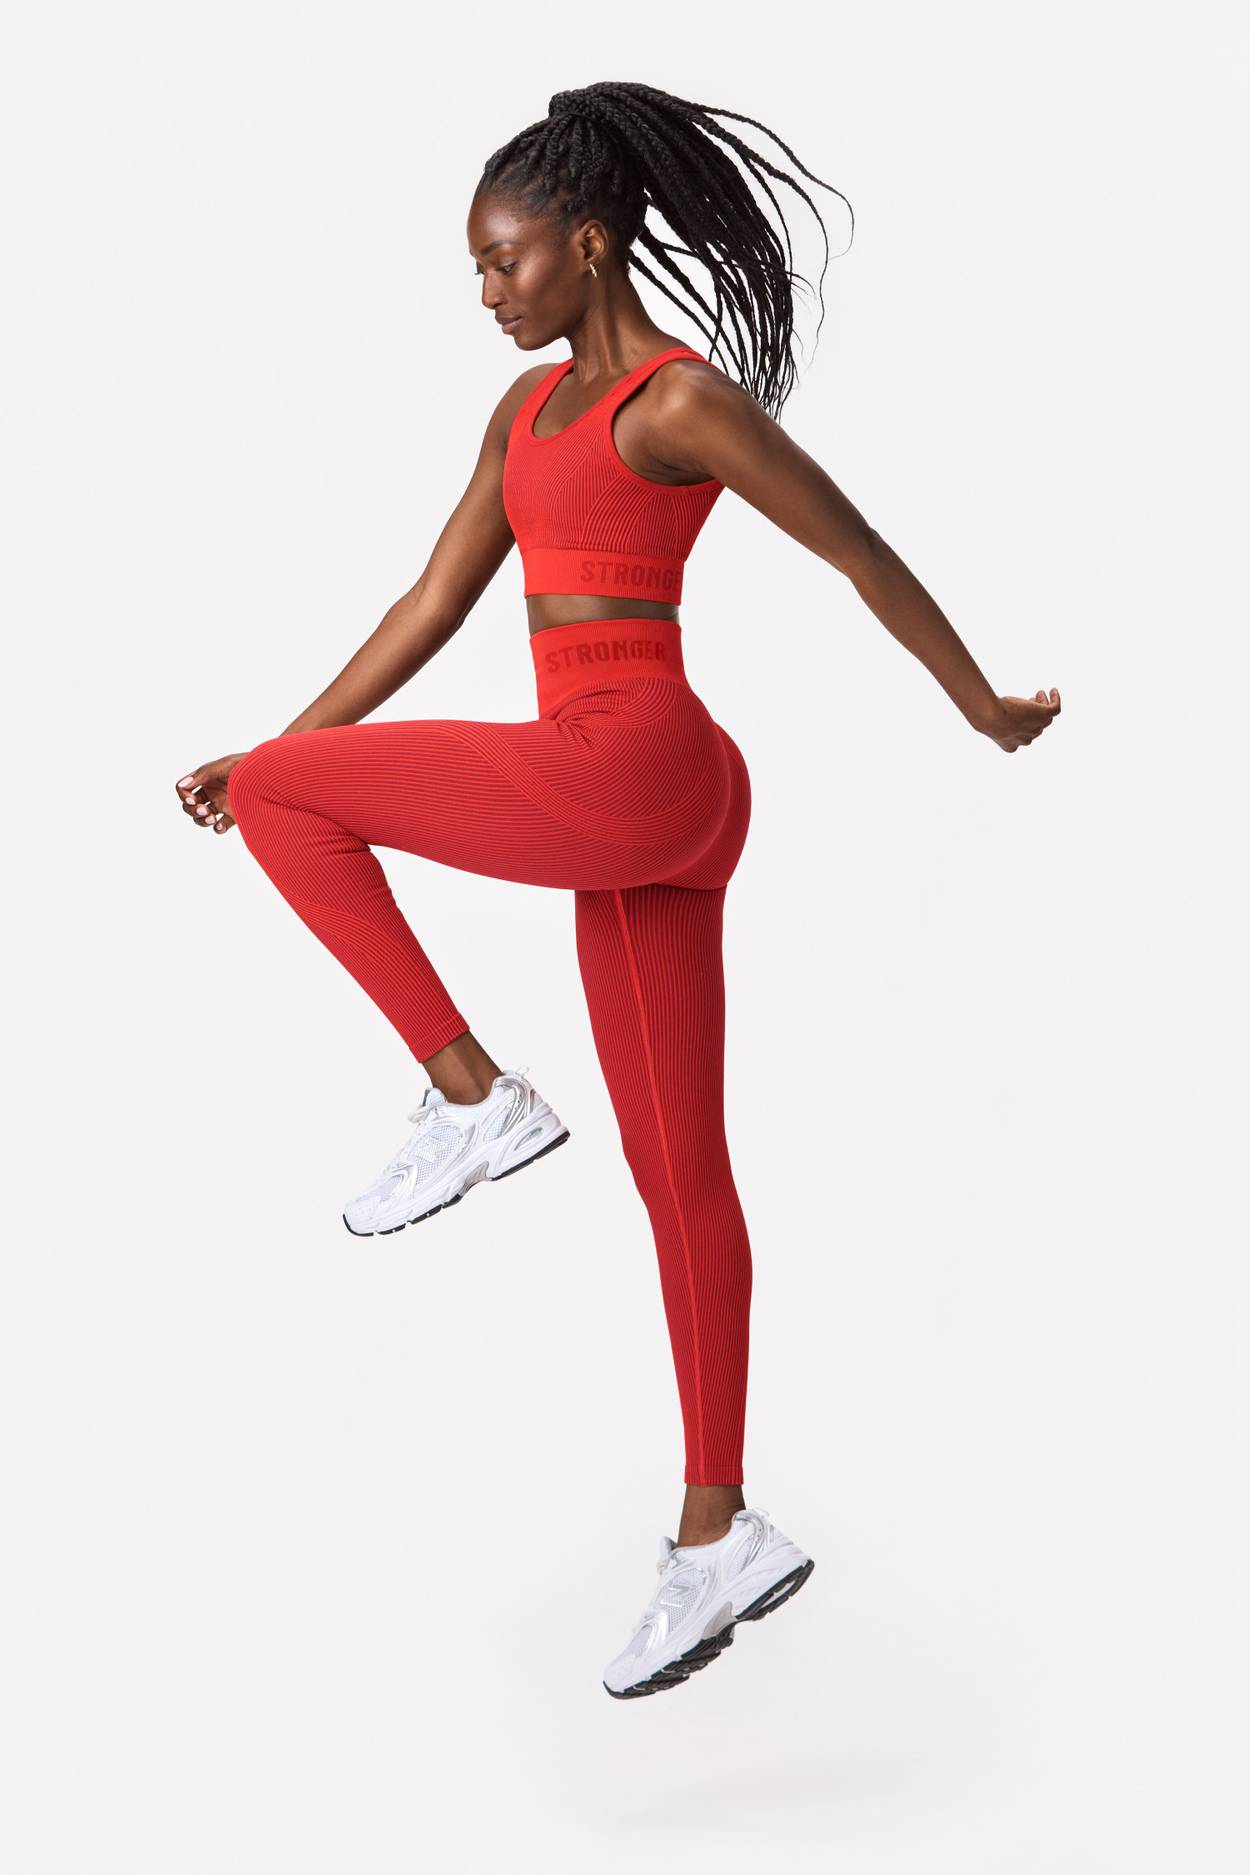 Yoga High-Waisted Performance Rib Leggings (Plus Size) in Sedona Rose F23-R